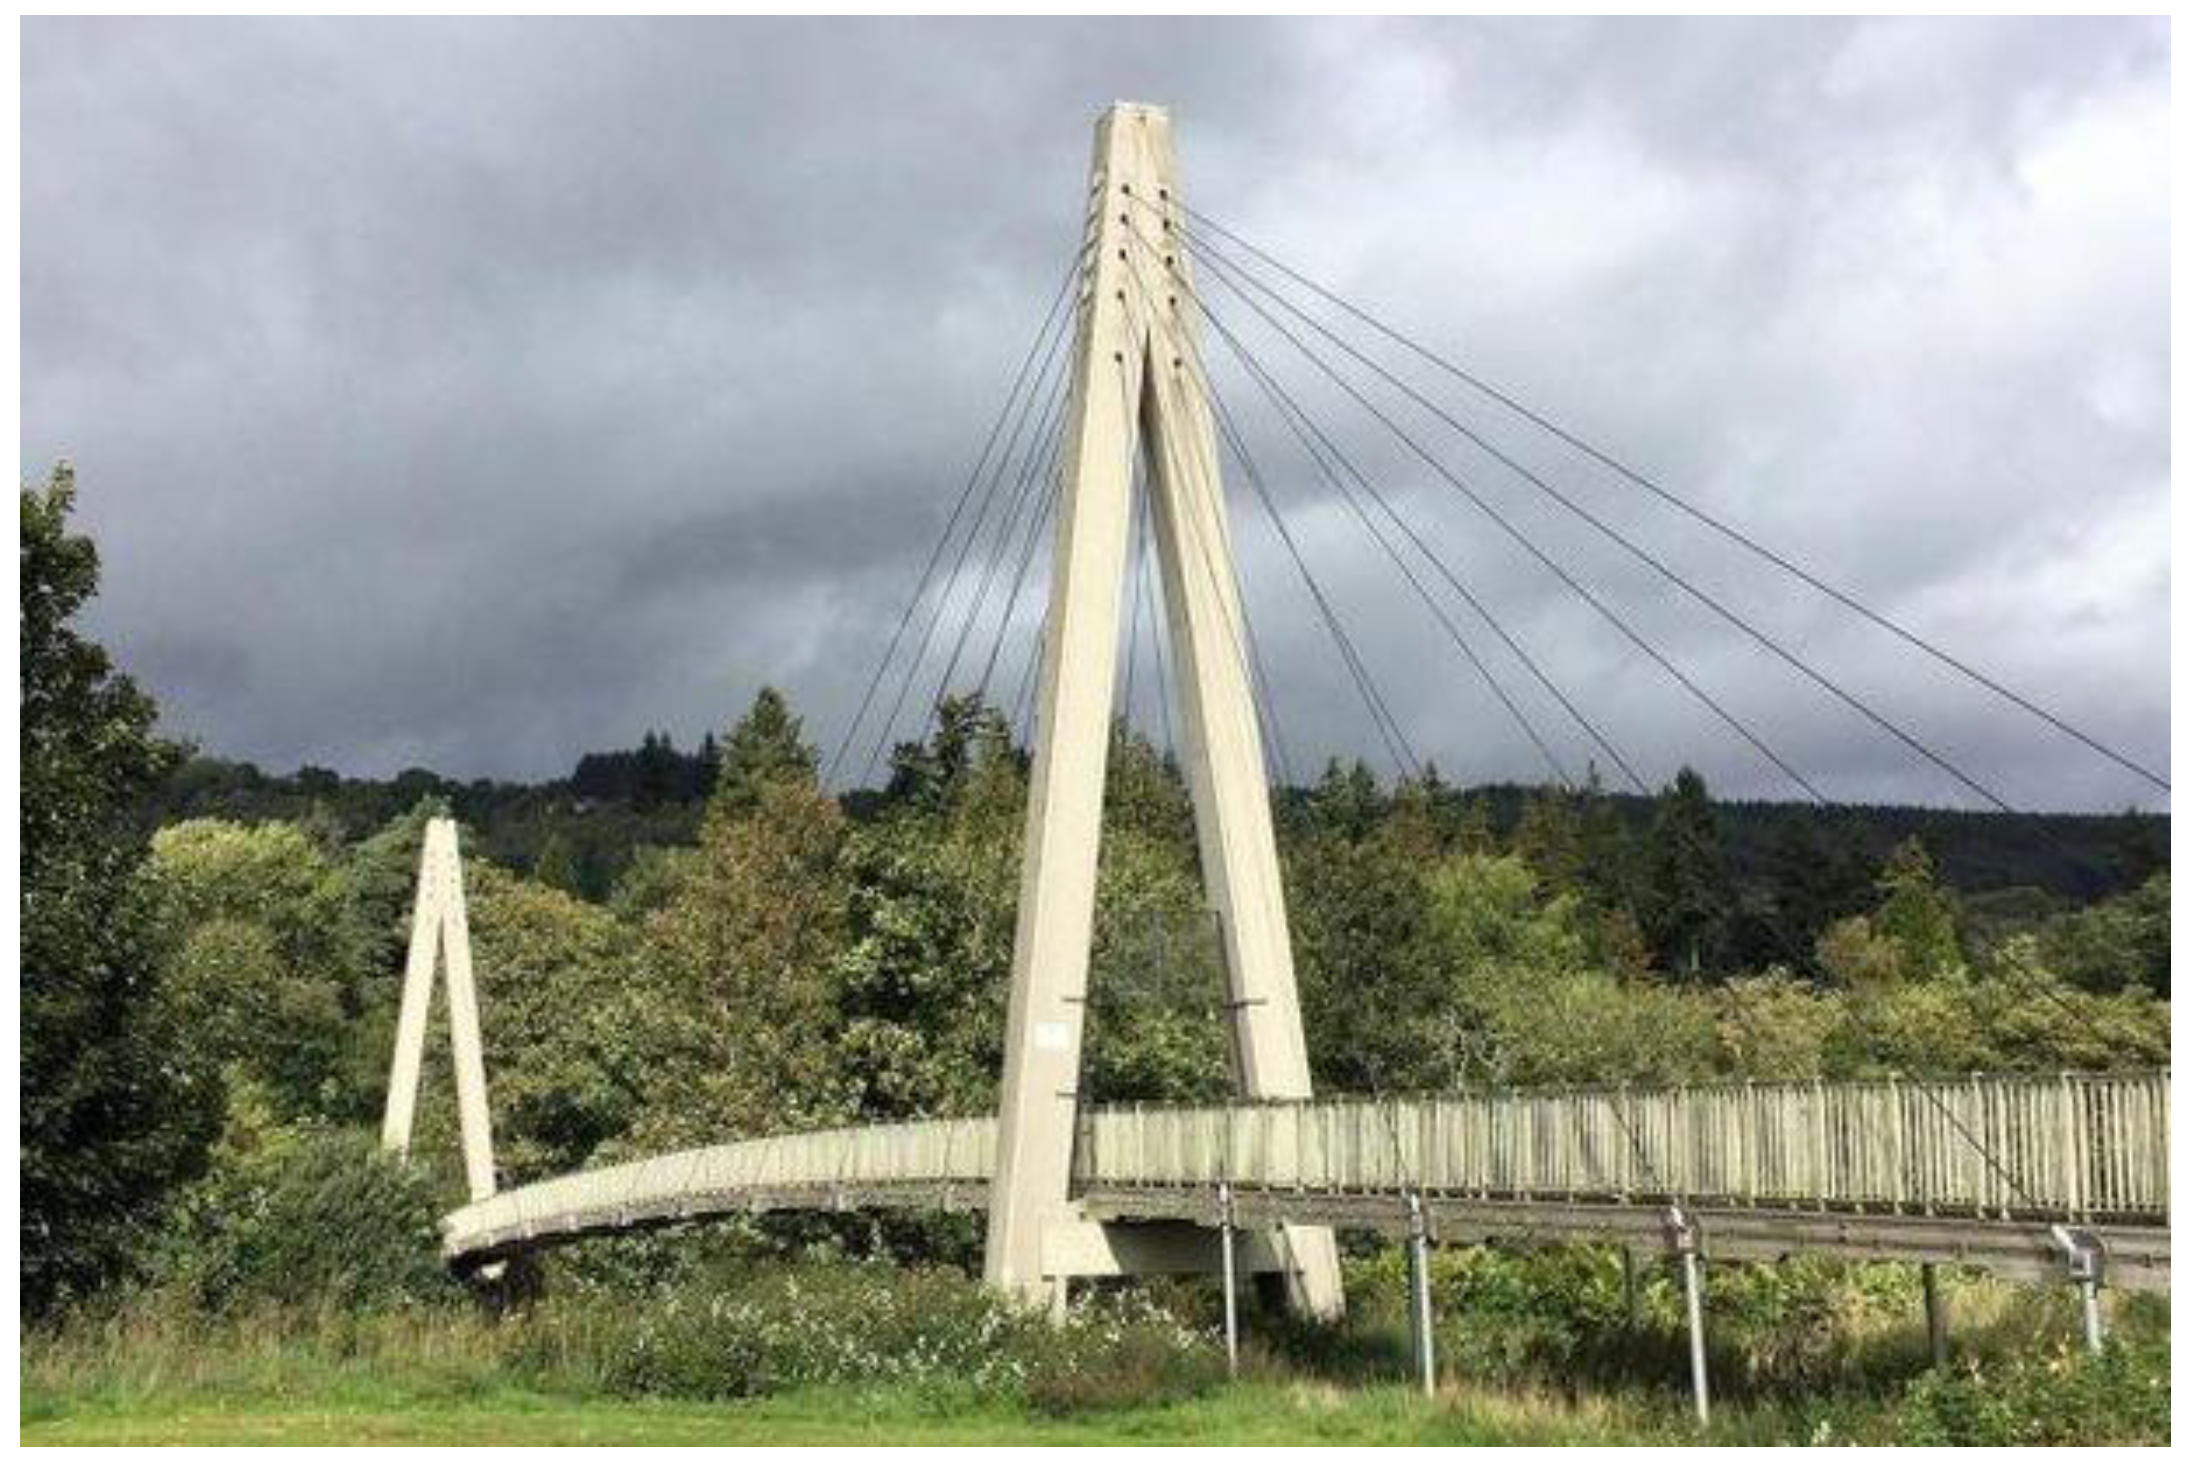 Garden Log Rope Bridge — Rope Bridge projects - UK and Worldwide